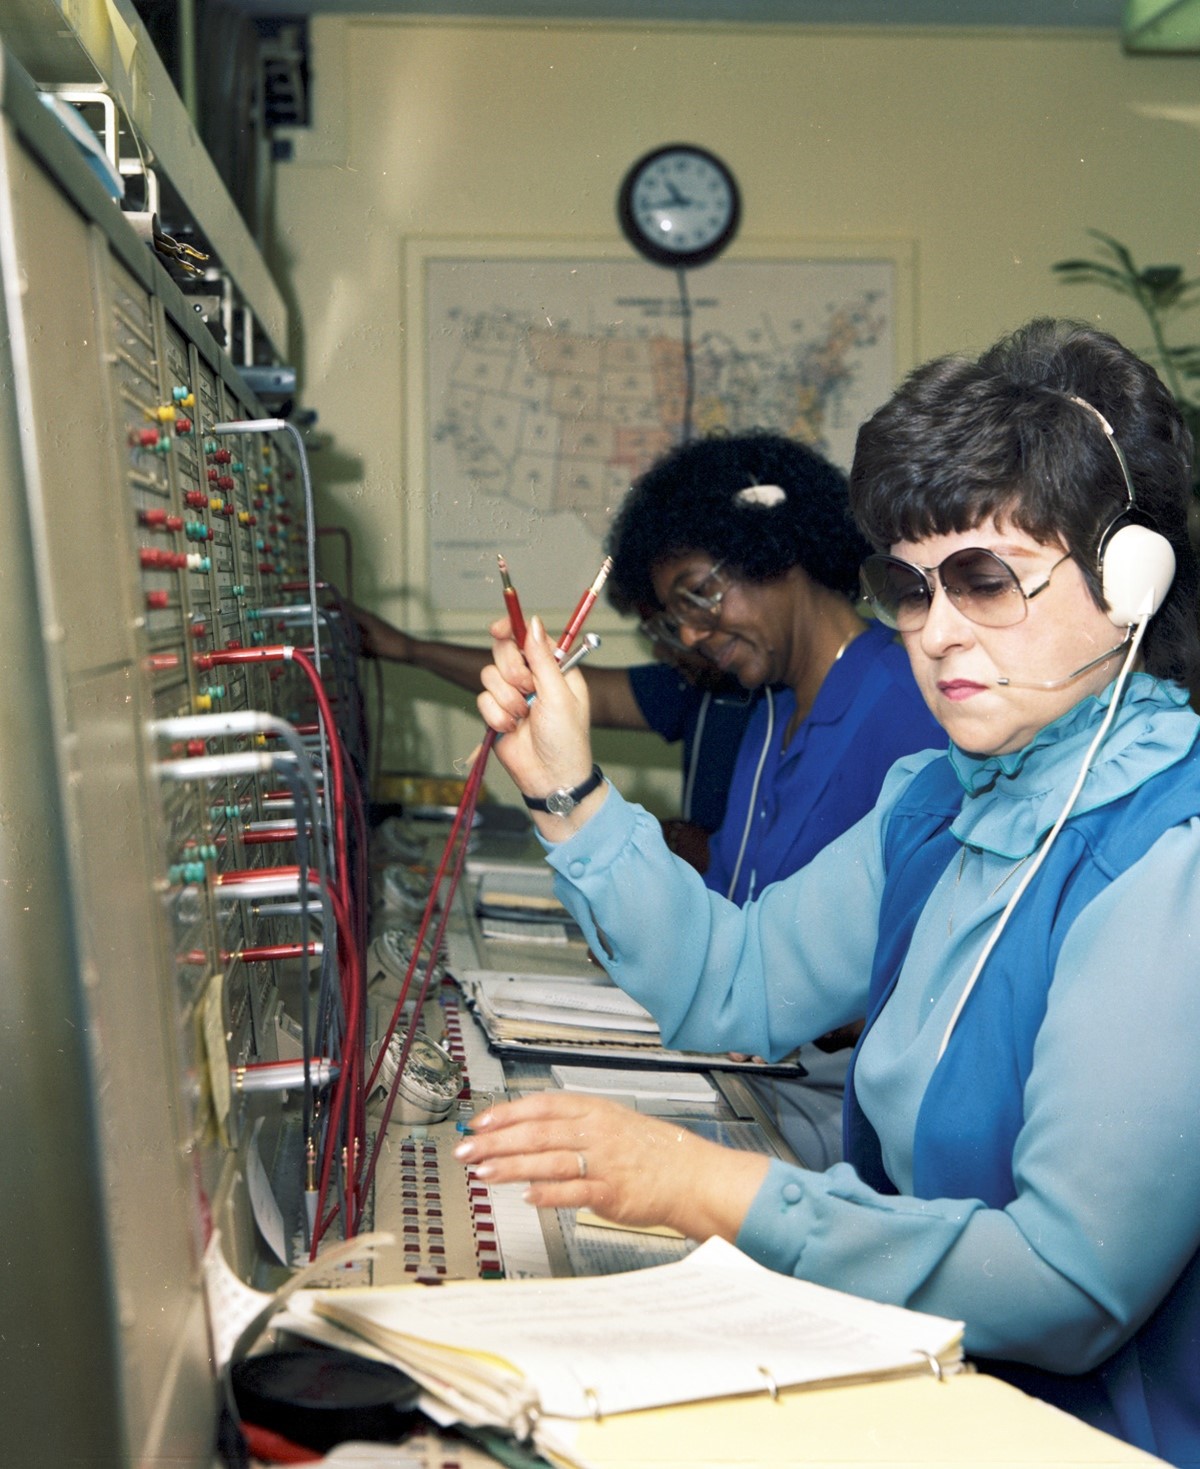 d center operators transfer telephone calls in 1983.